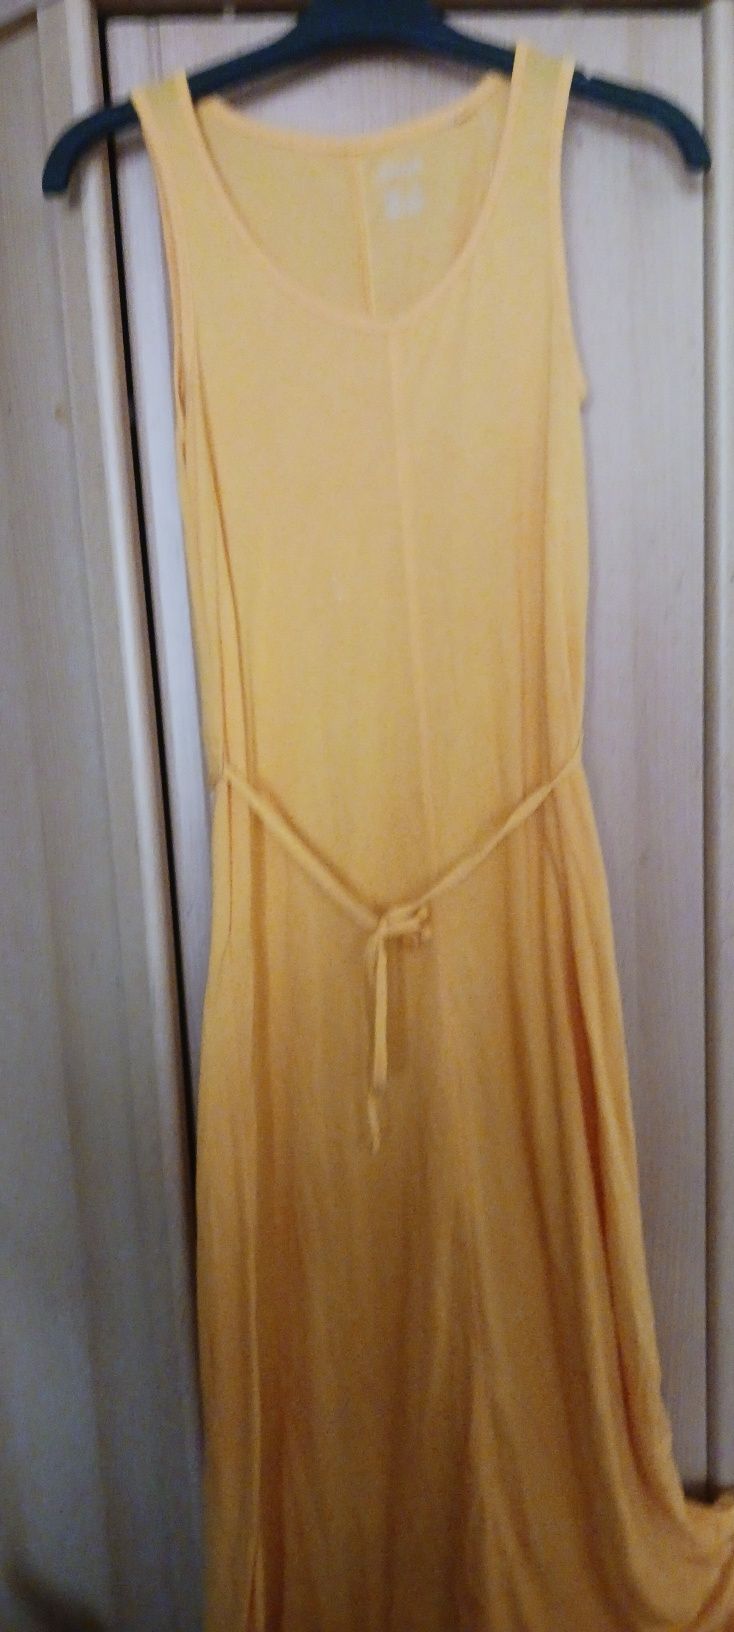 Nowa maxi sukienka żółta